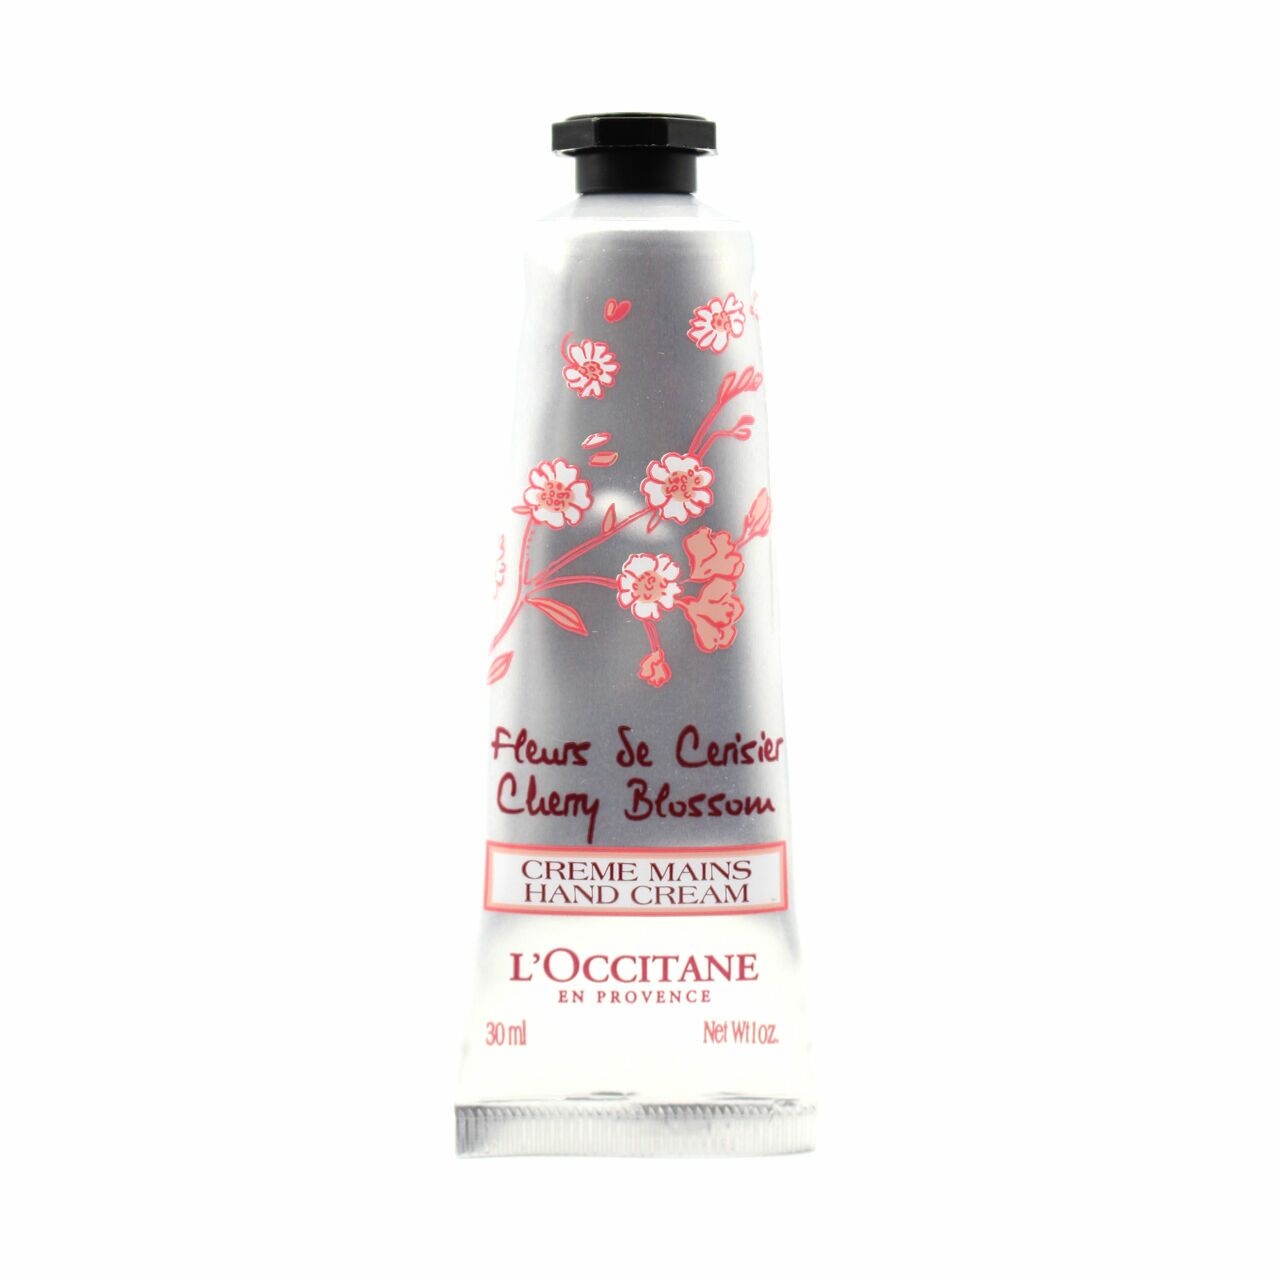 L'occitane Cherry Blossom Creme Mains Hand Cream Body Care